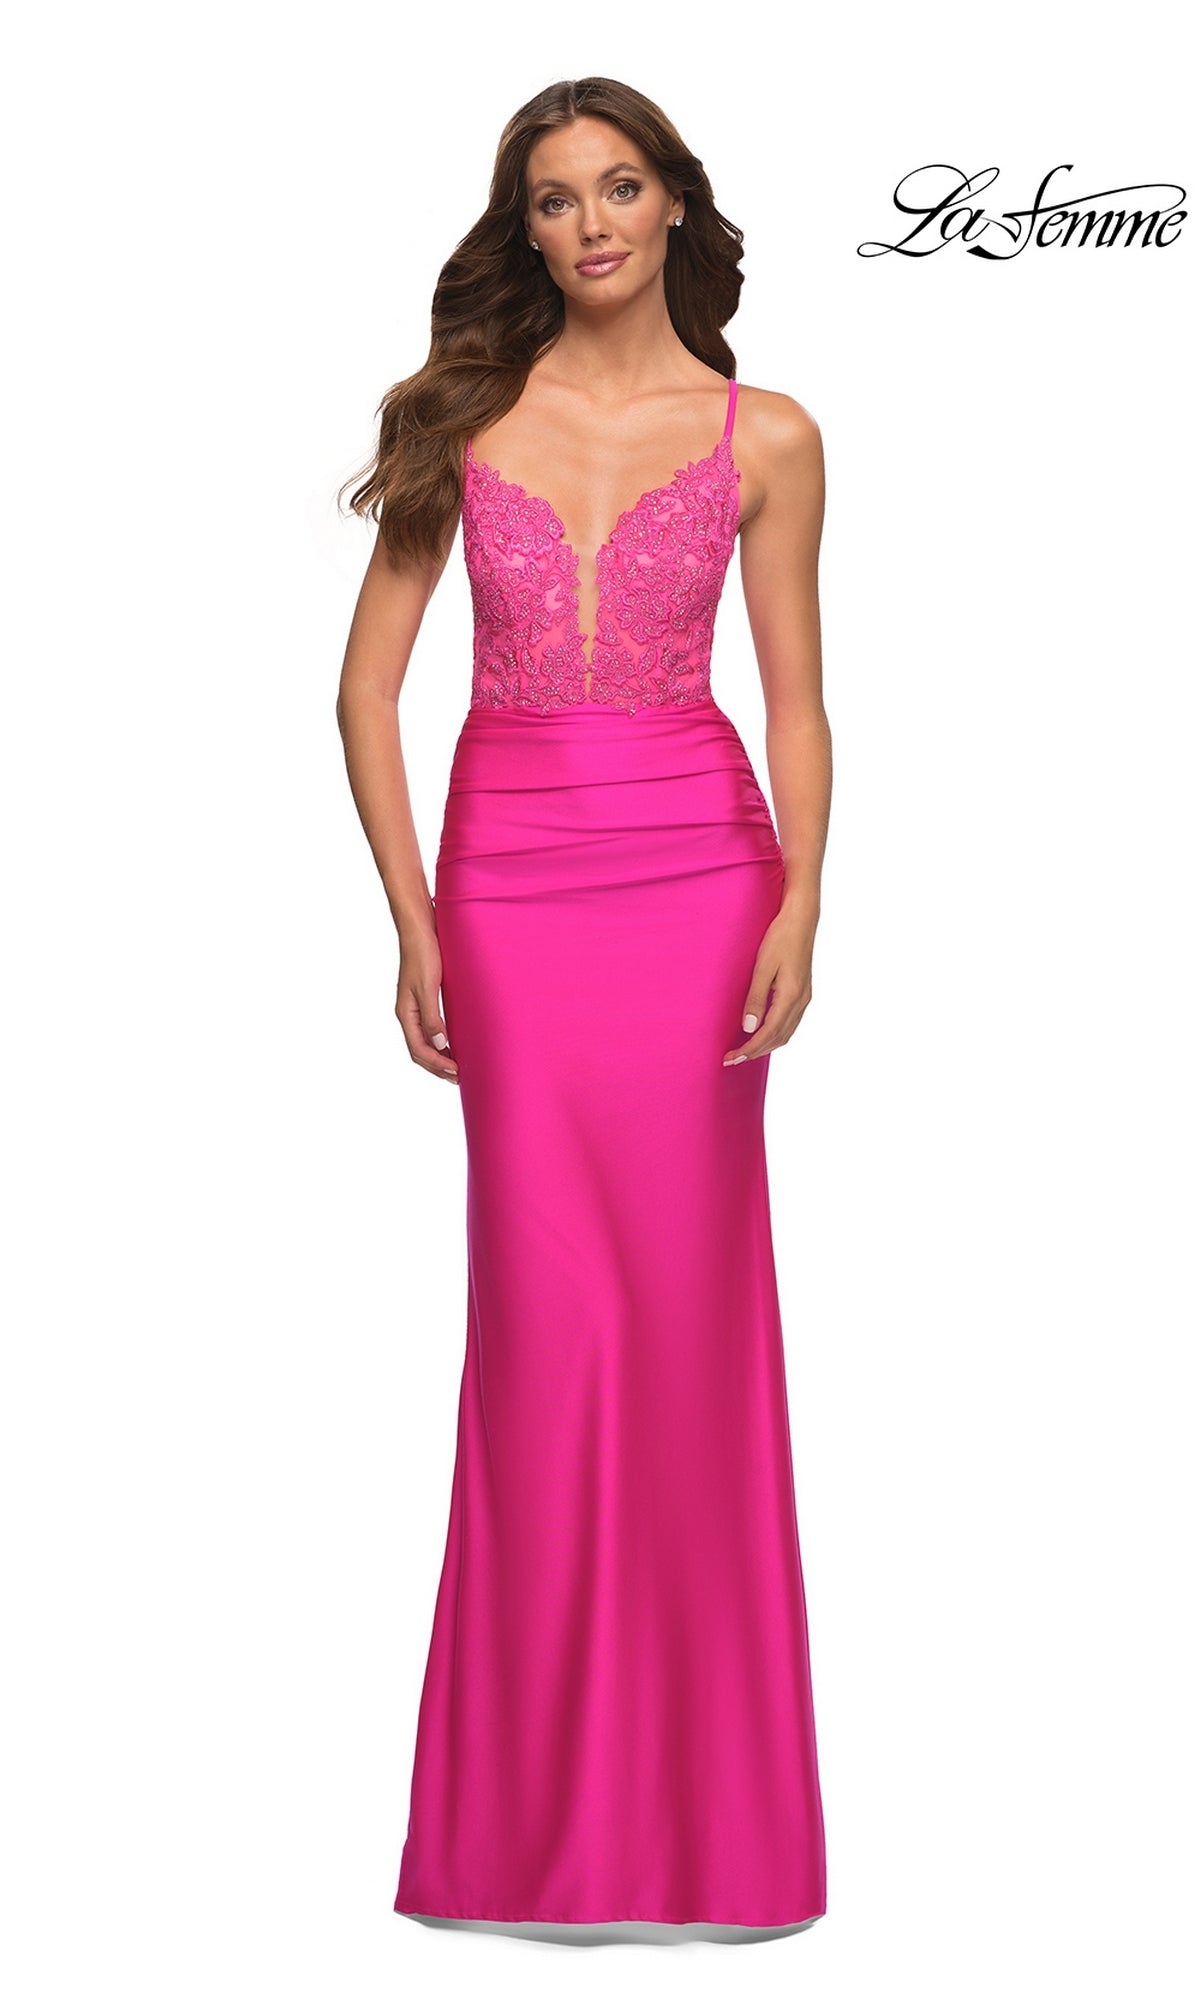  La Femme 30606 Formal Prom Dress